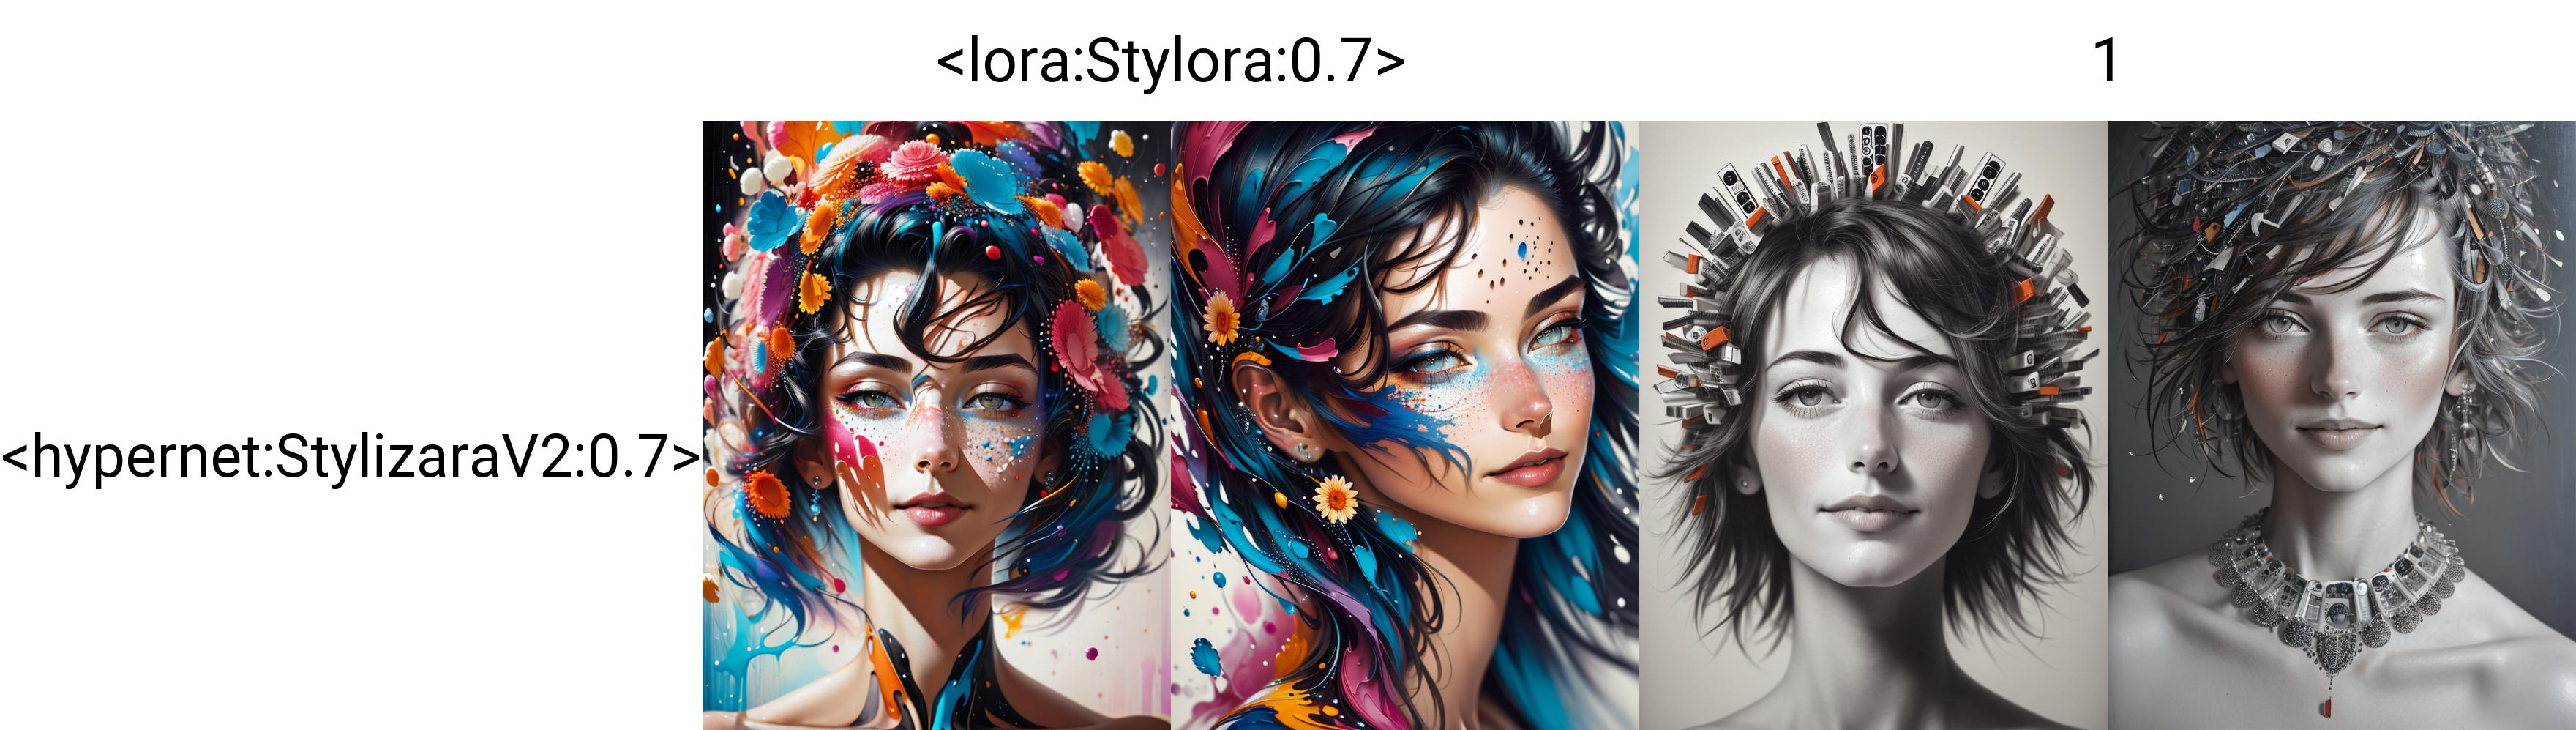 Stylora / Art of colors image by Kotoshko